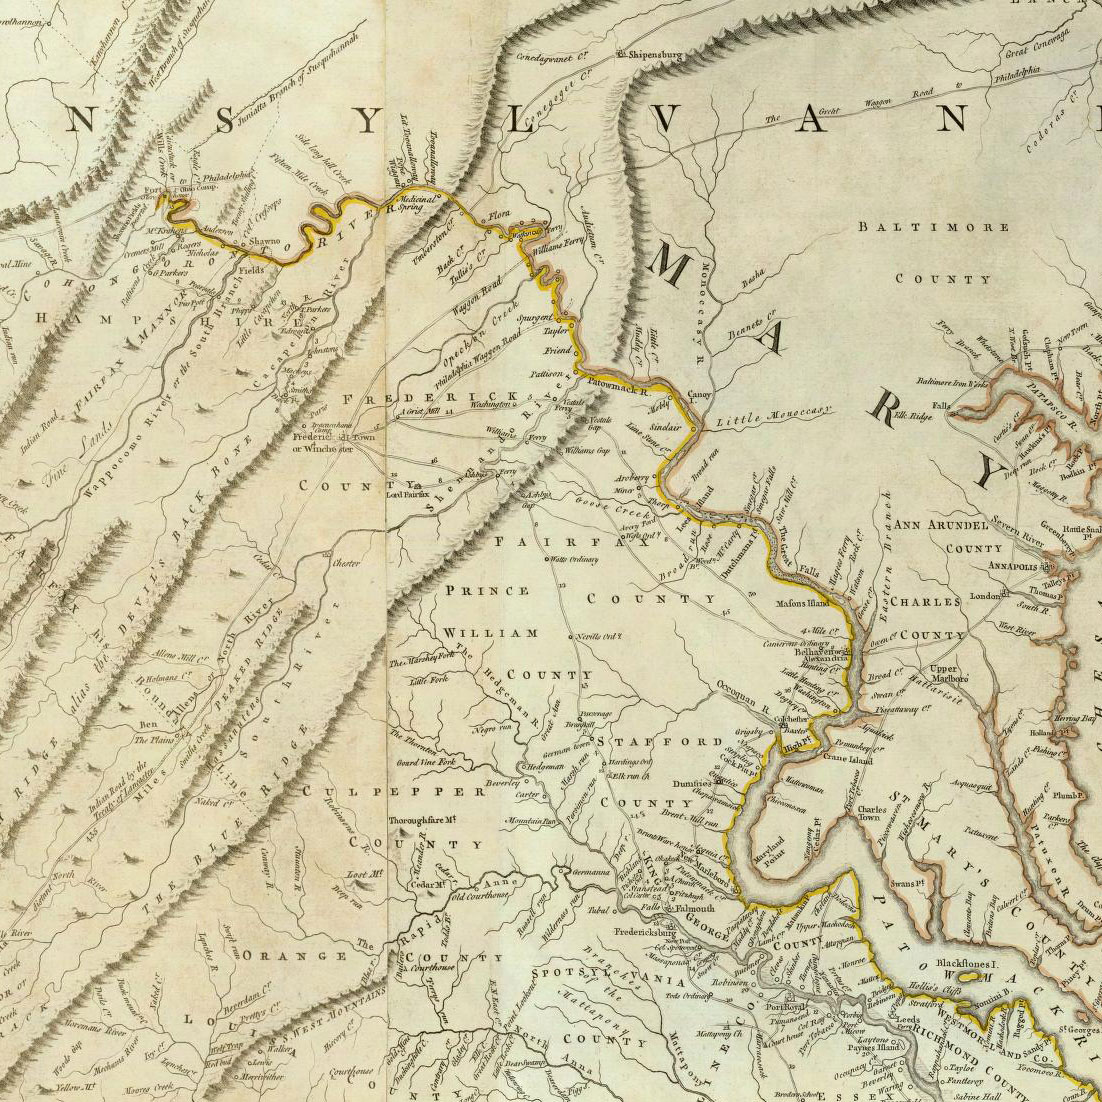 Spotsylvania Co., VA on 1776 map © 2000 Cartography Associates (DavidRumsey.com)